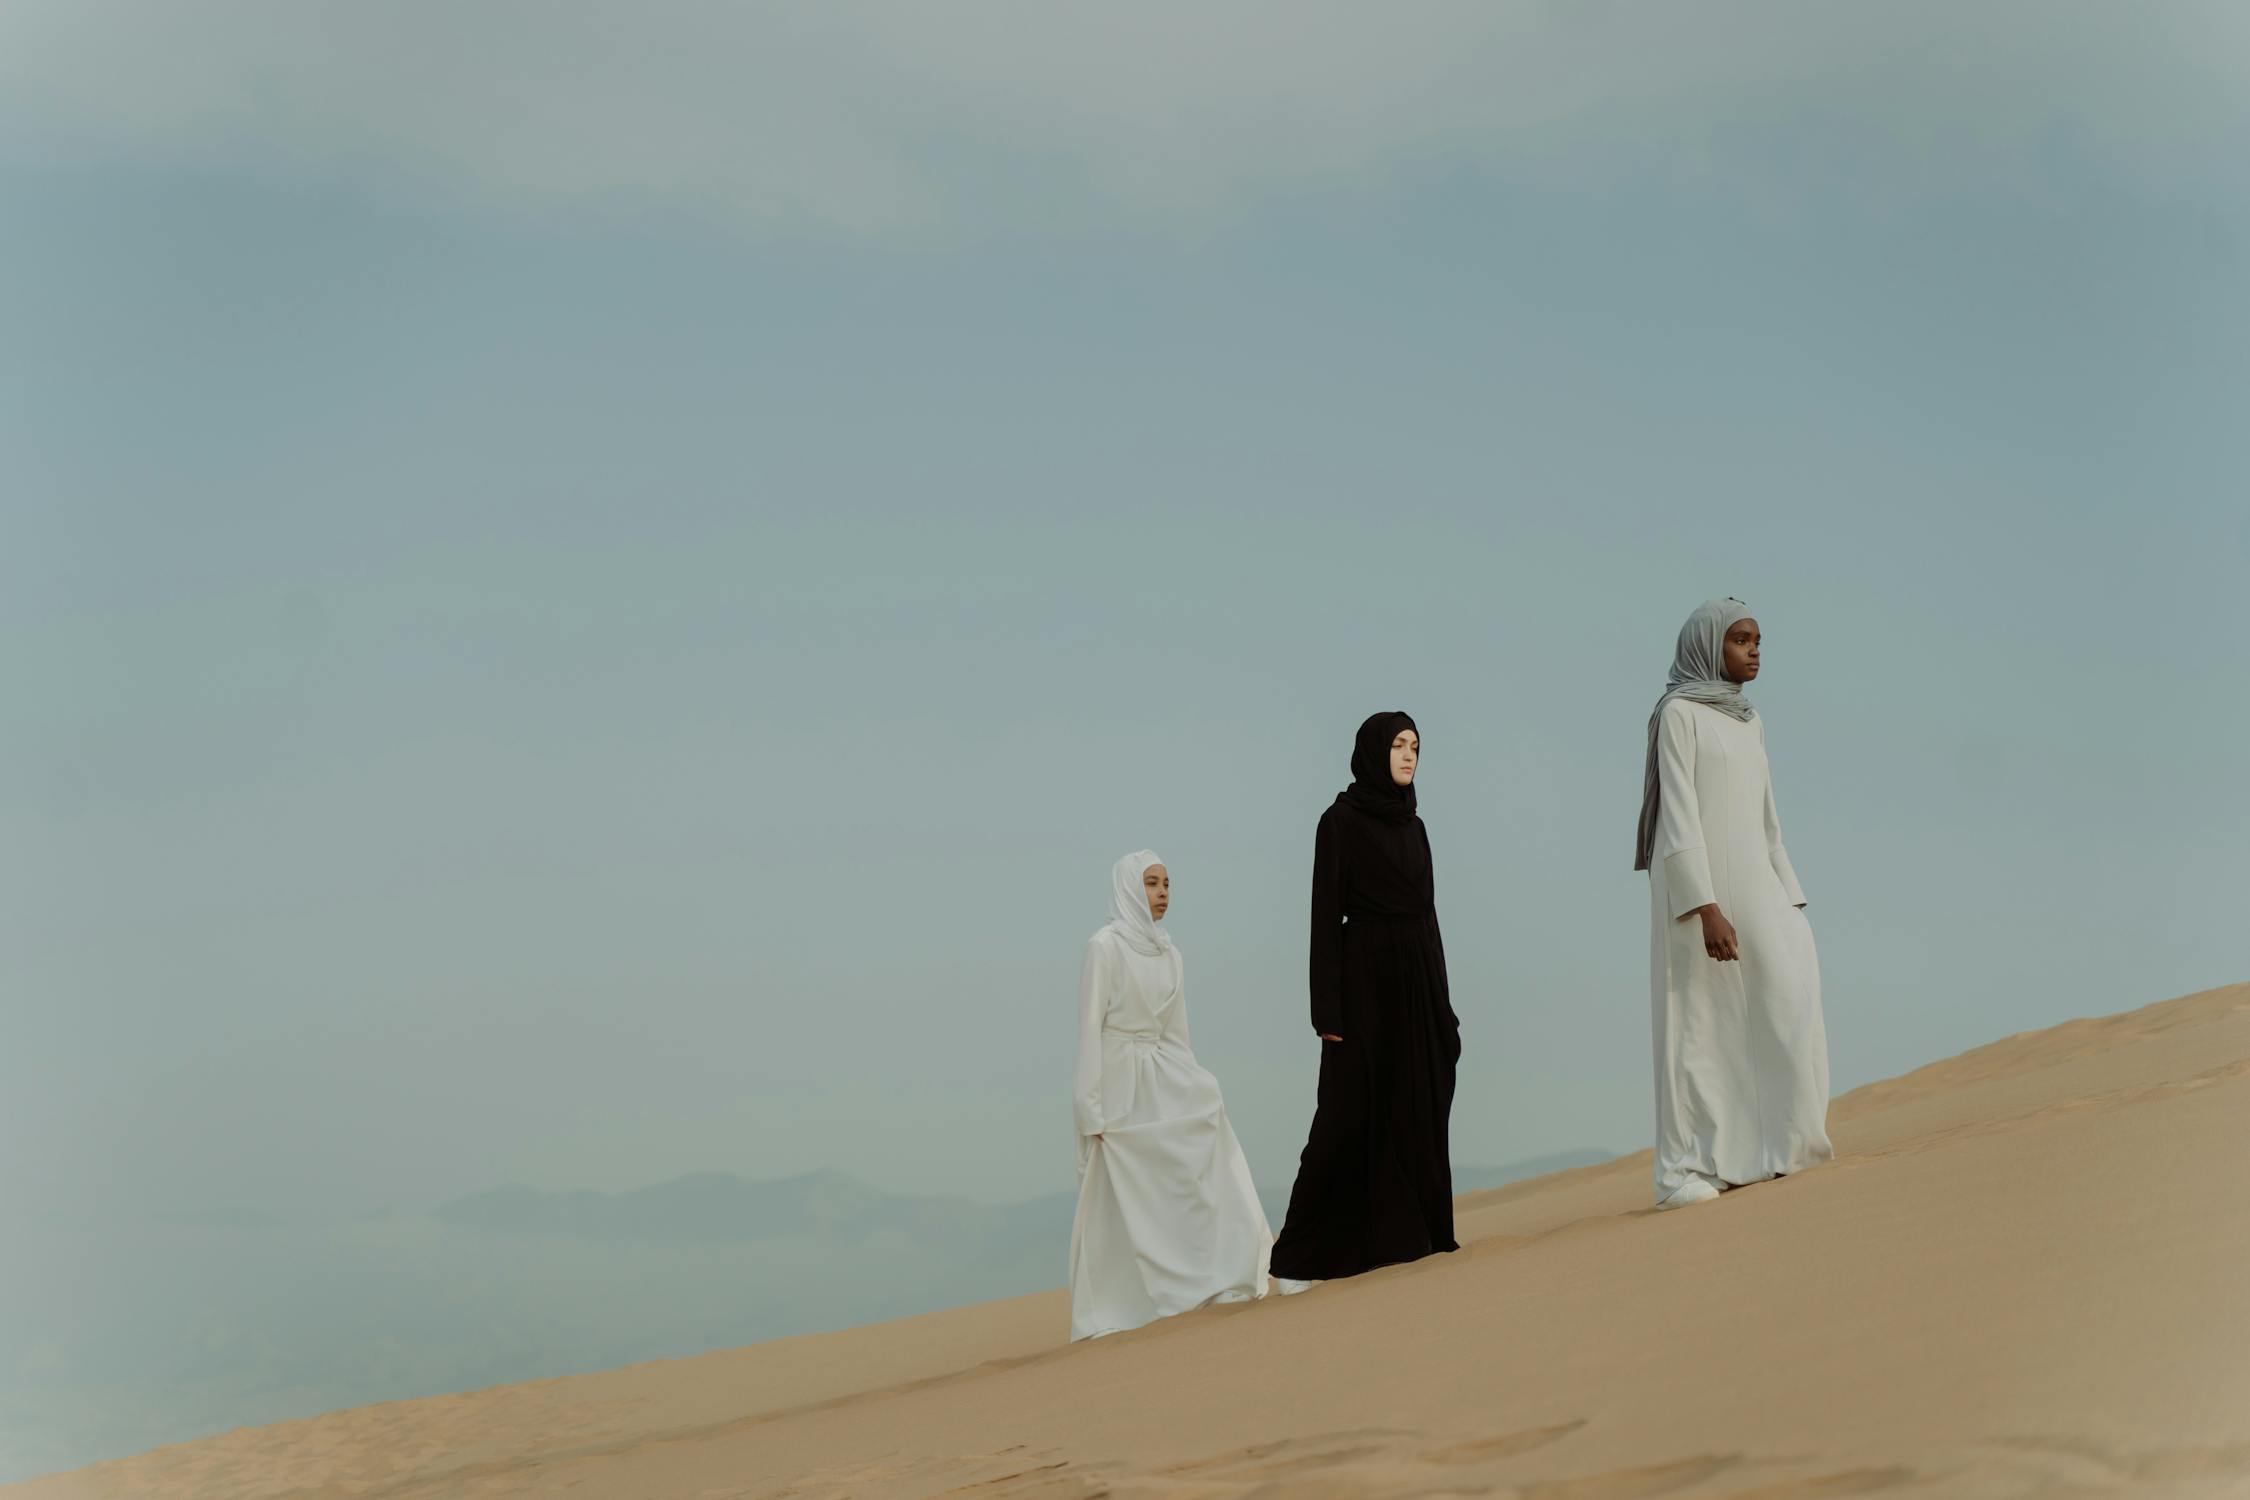 Women in Hijab Walking in the Desert · Free Stock Photo